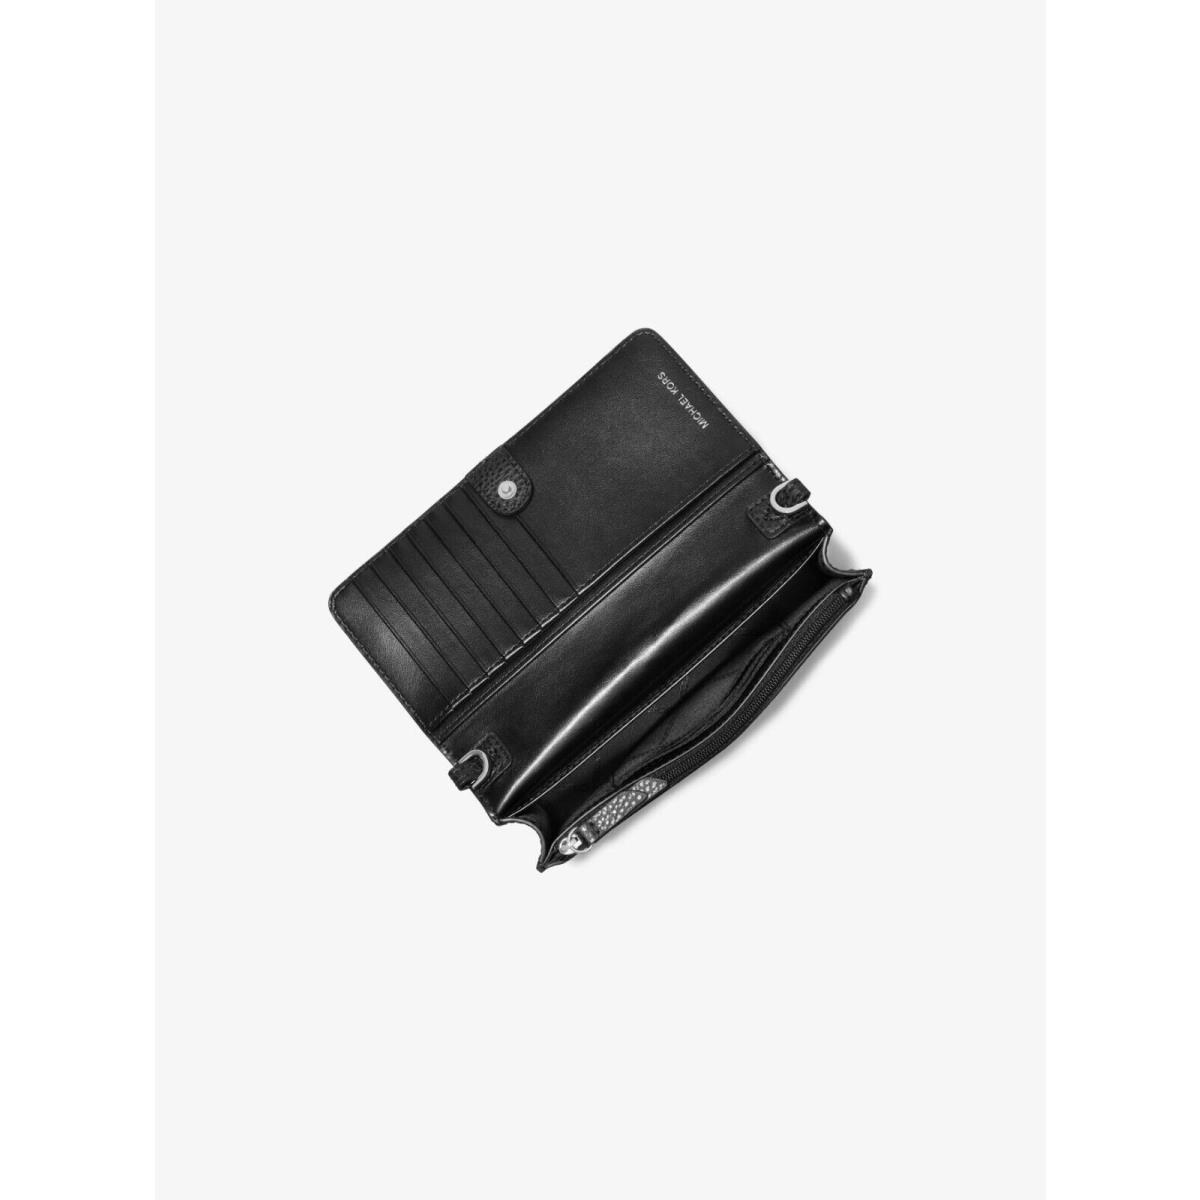 Michael Kors  bag   - Black Handle/Strap, Silver Hardware, Black Exterior 12